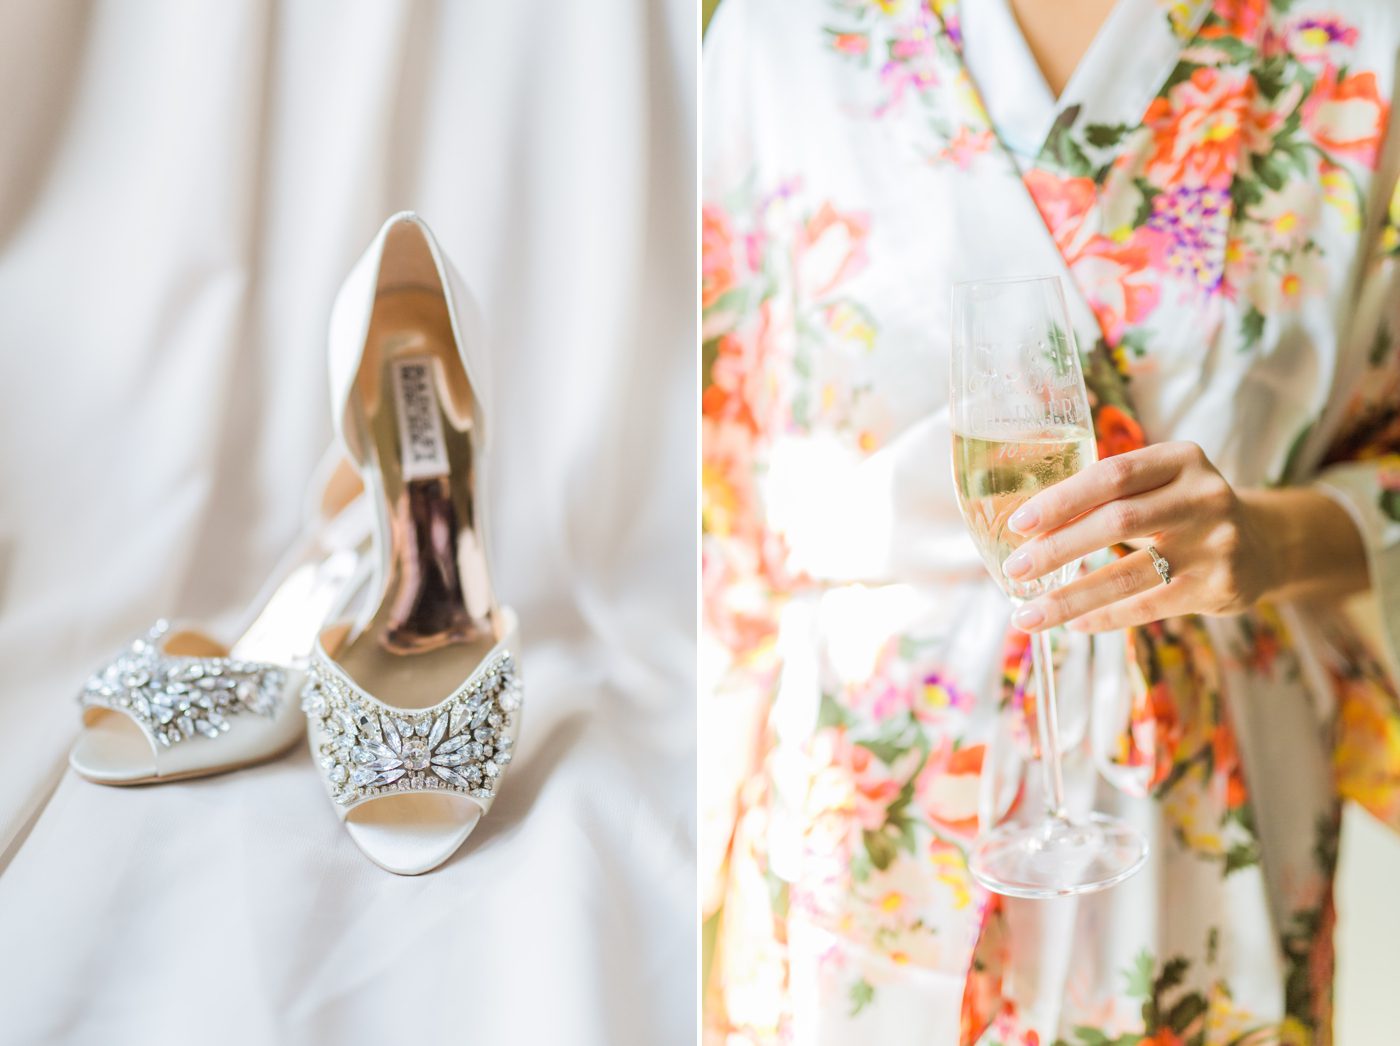 Champage and Badgley Mischka shoes | Vinoy renaissance wedding photos | St Petersburg FL wedding photographersCatherine Ann Photography